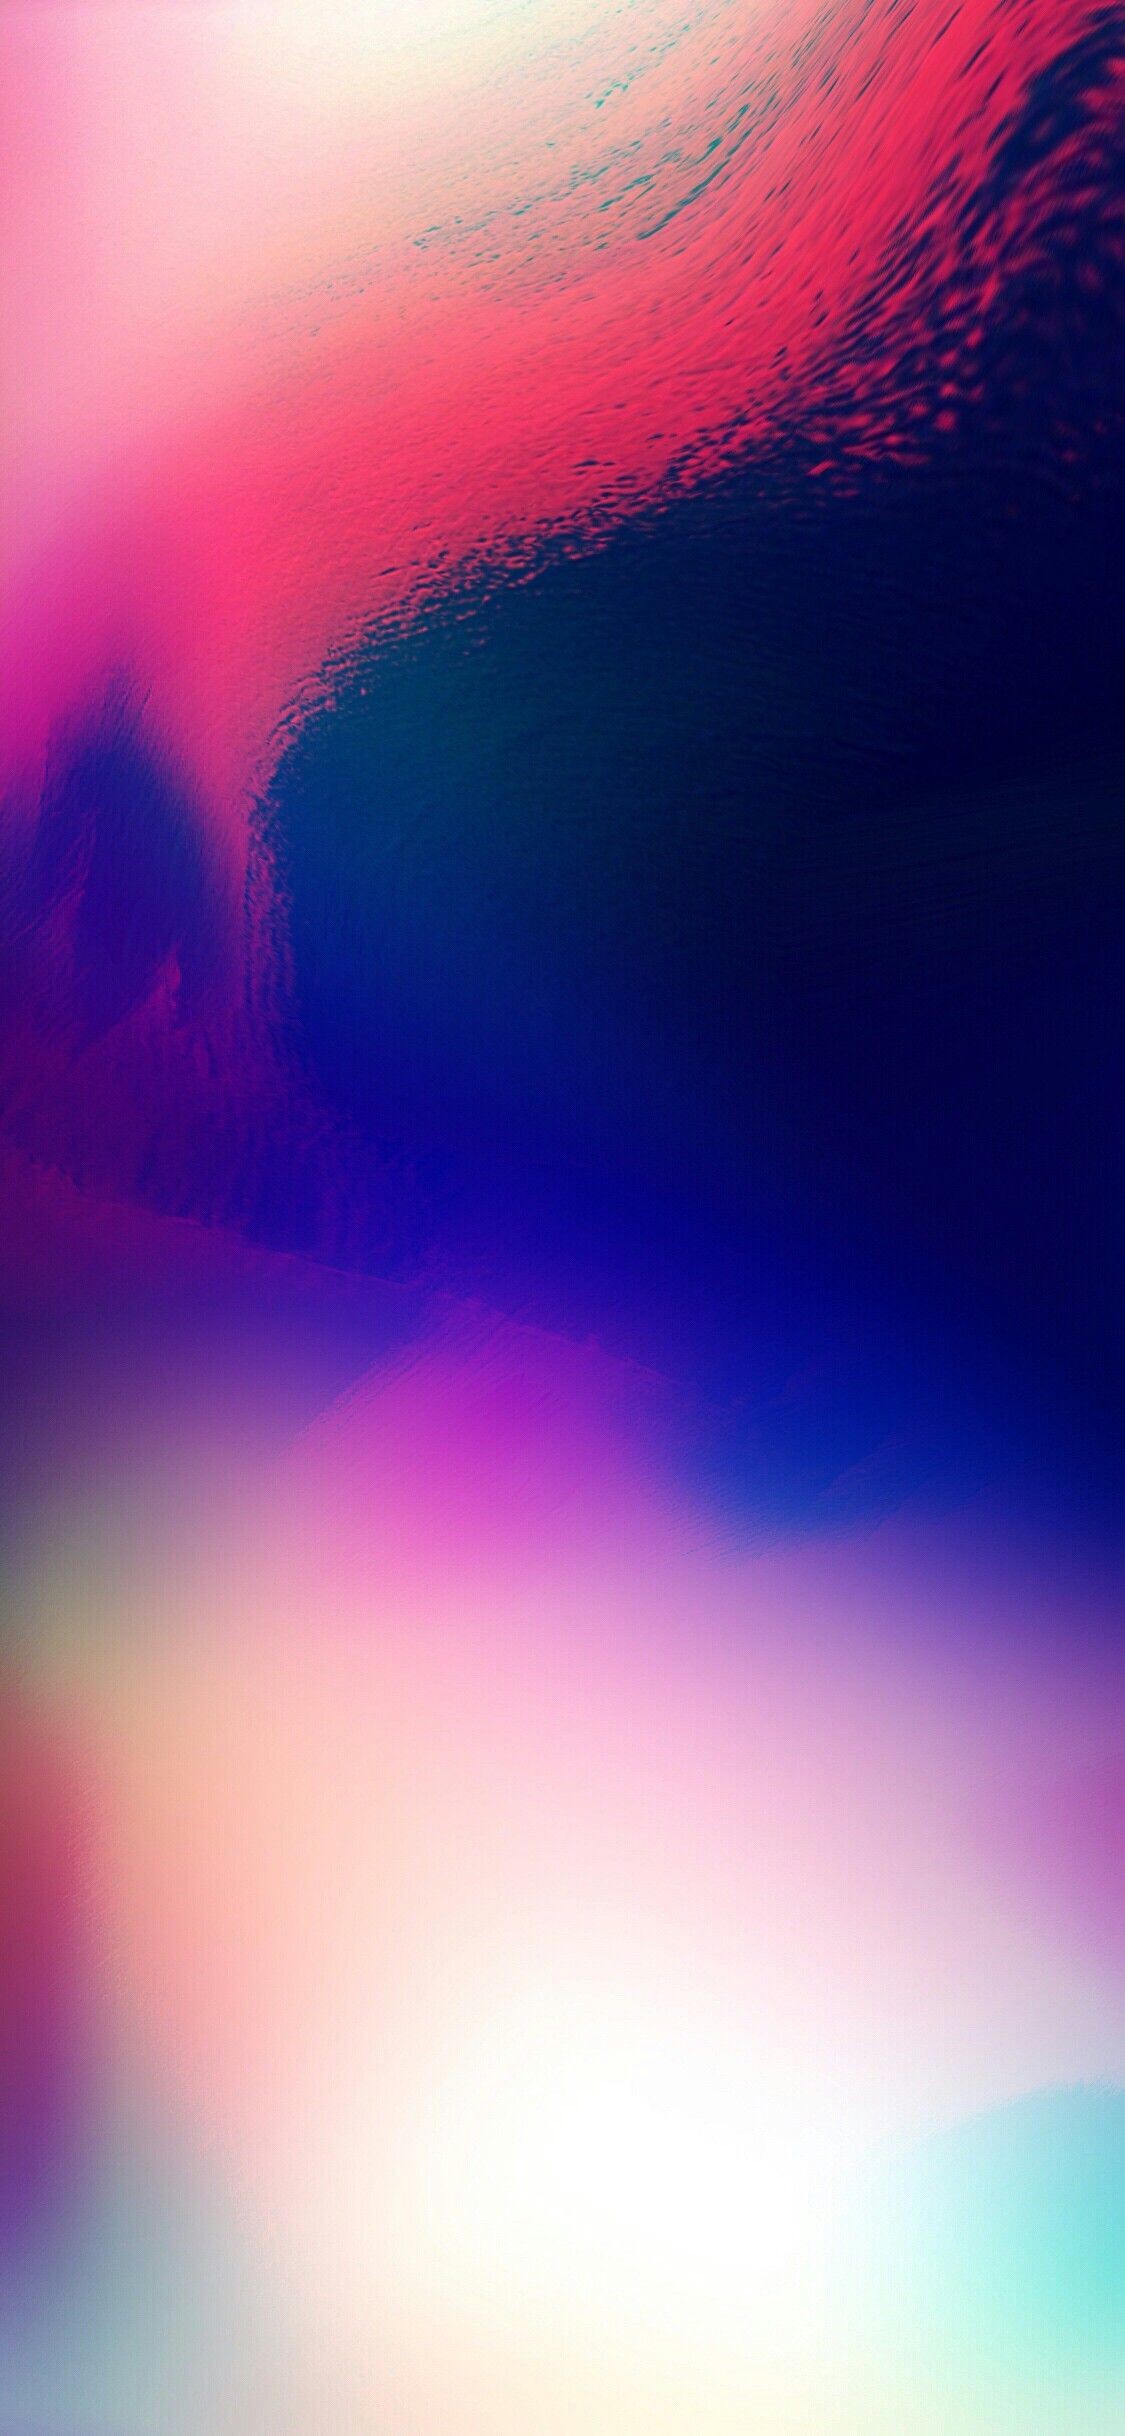 iphone 5s wallpaper,sky,blue,violet,purple,light